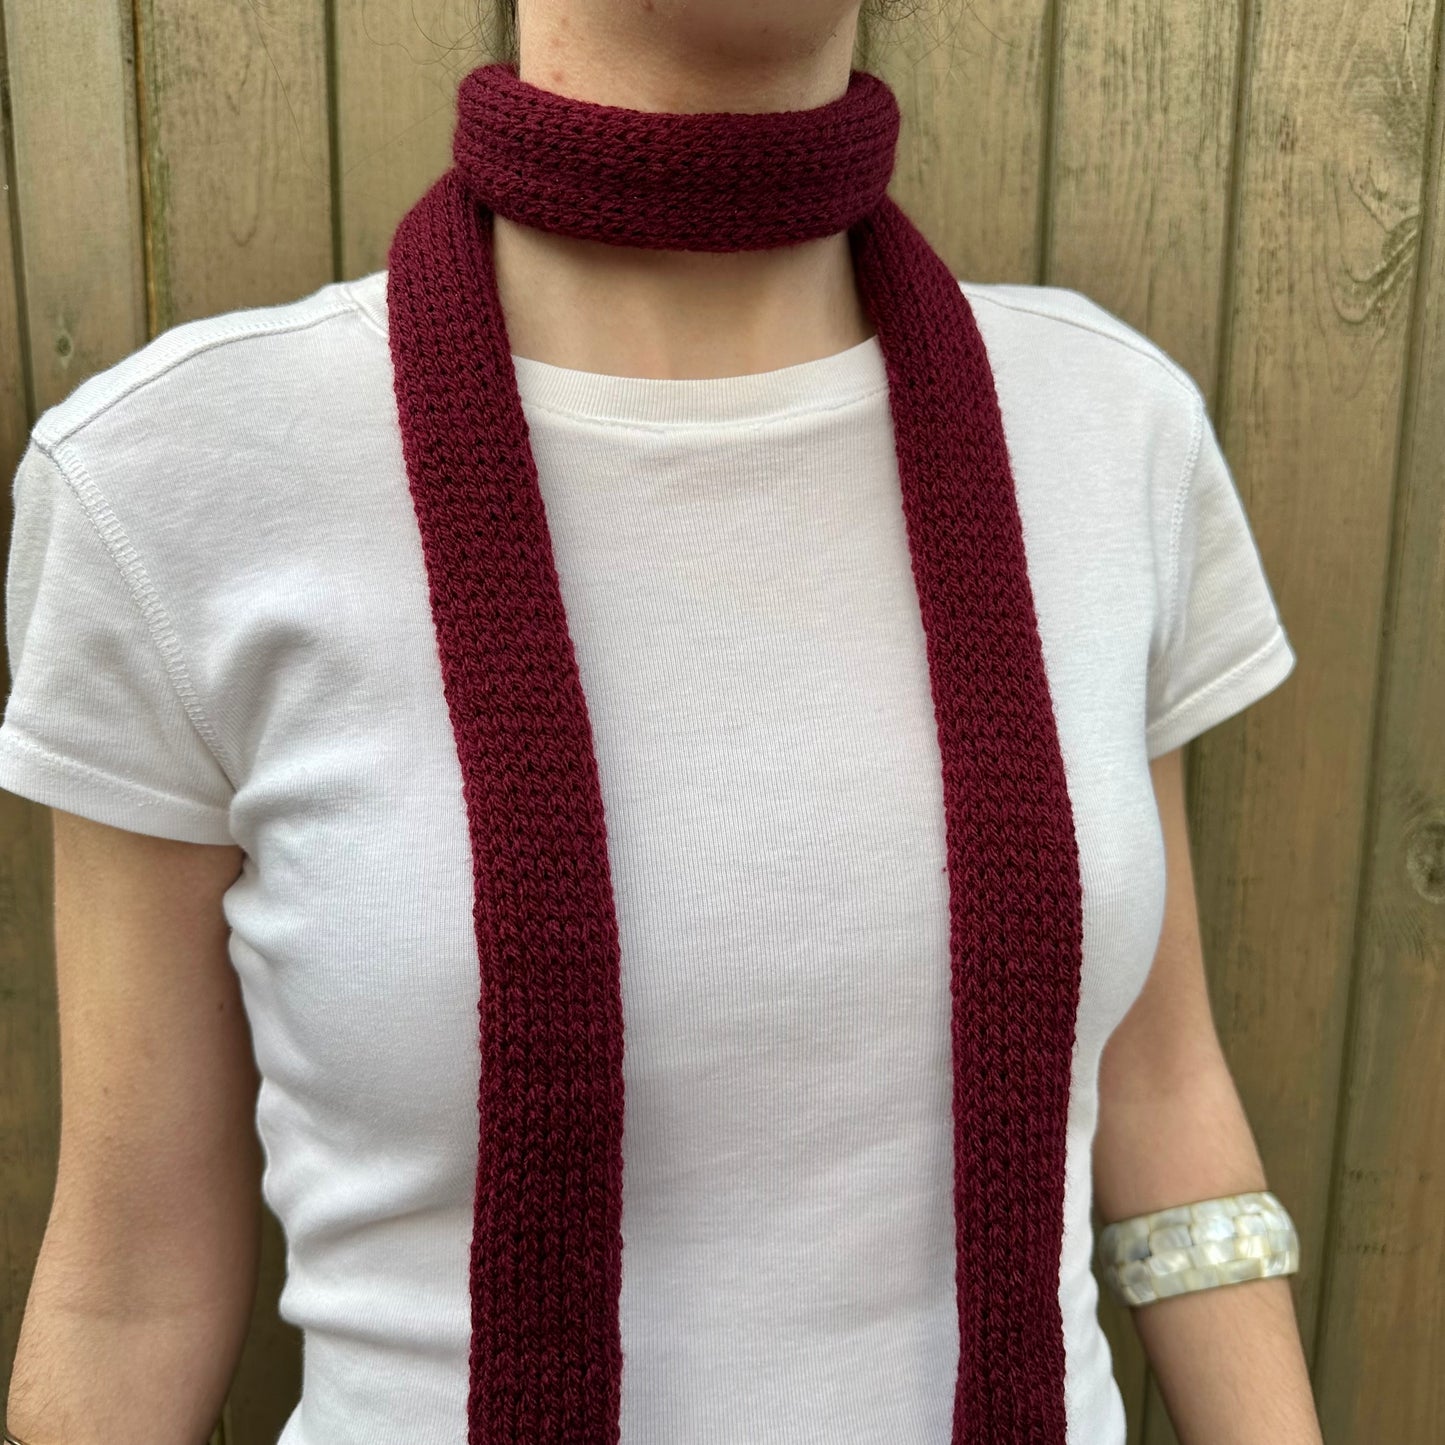 Handmade knitted skinny scarf in burgundy